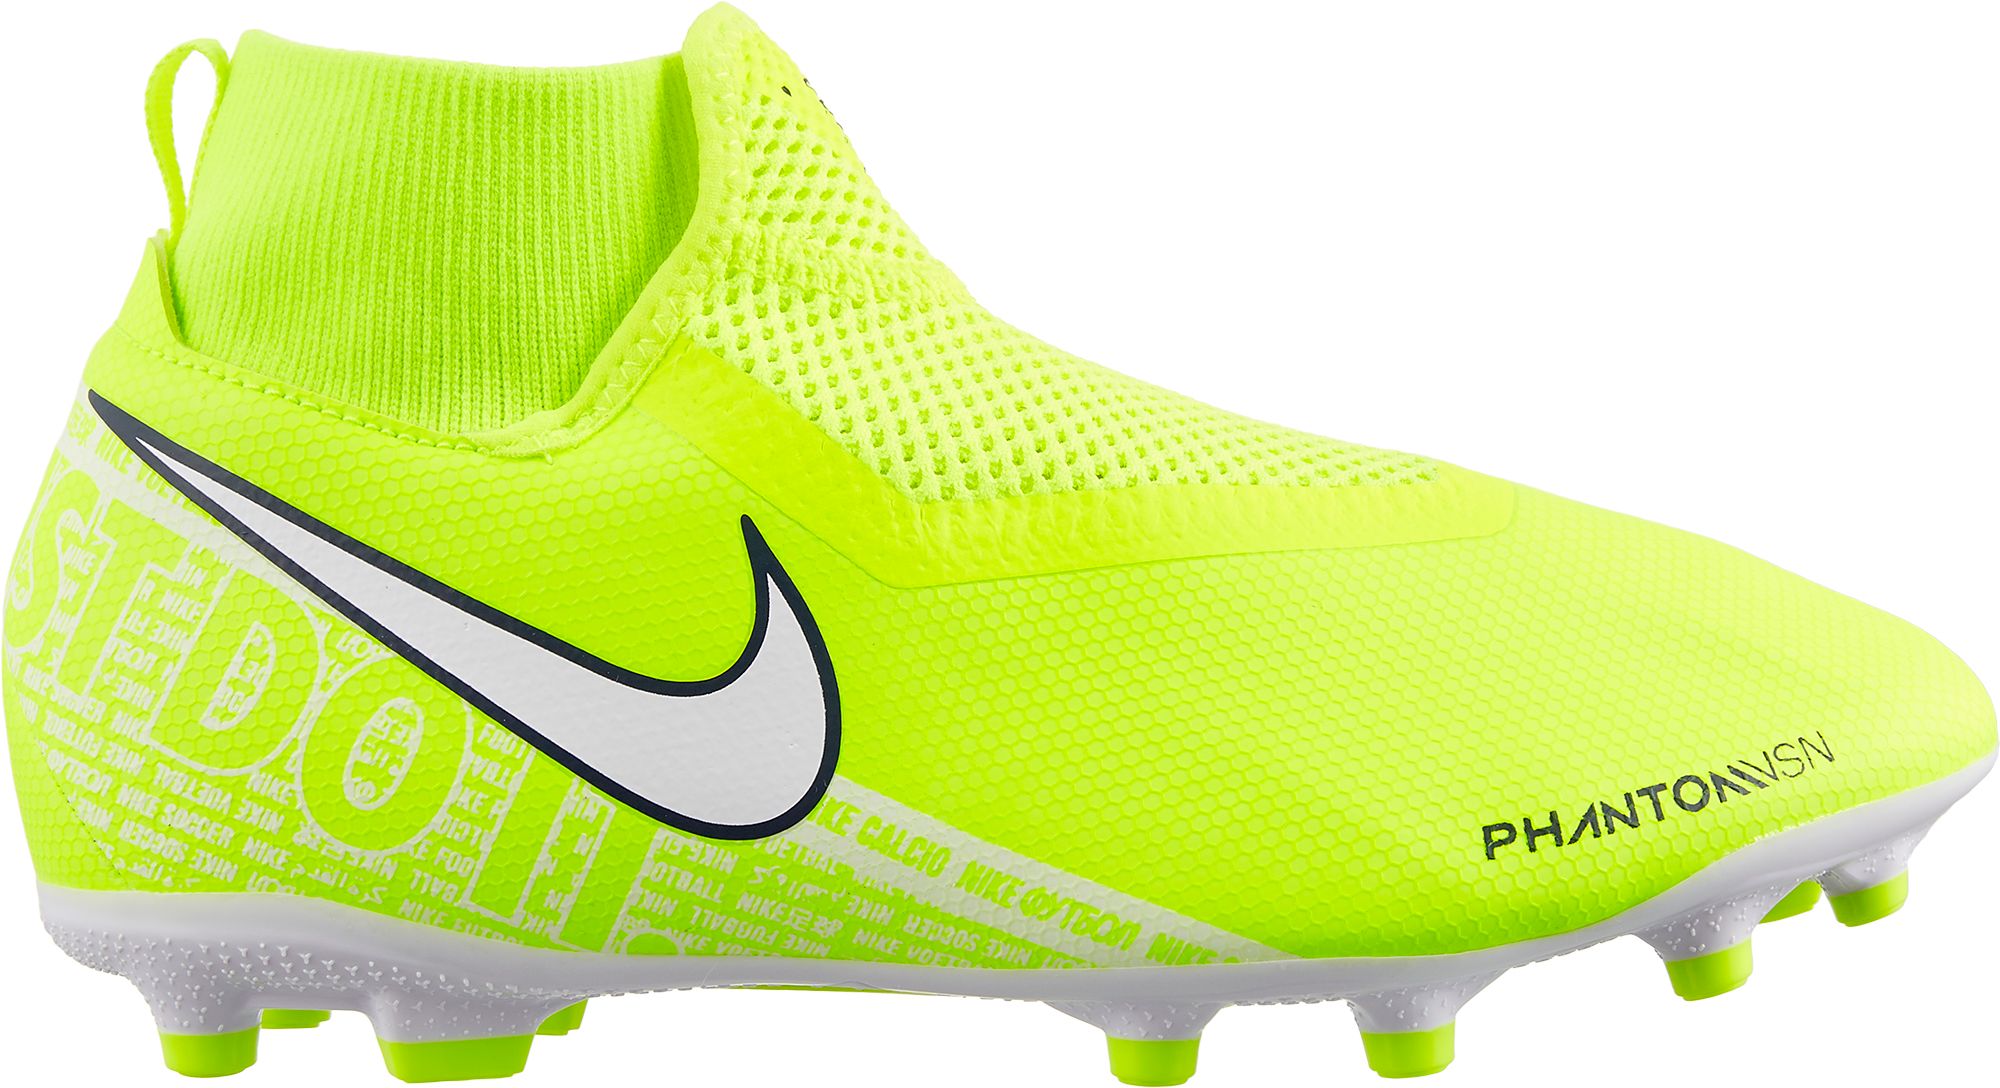 Nike Hypervenom Phantom 2 Futbol Sala Botines Fútbol en